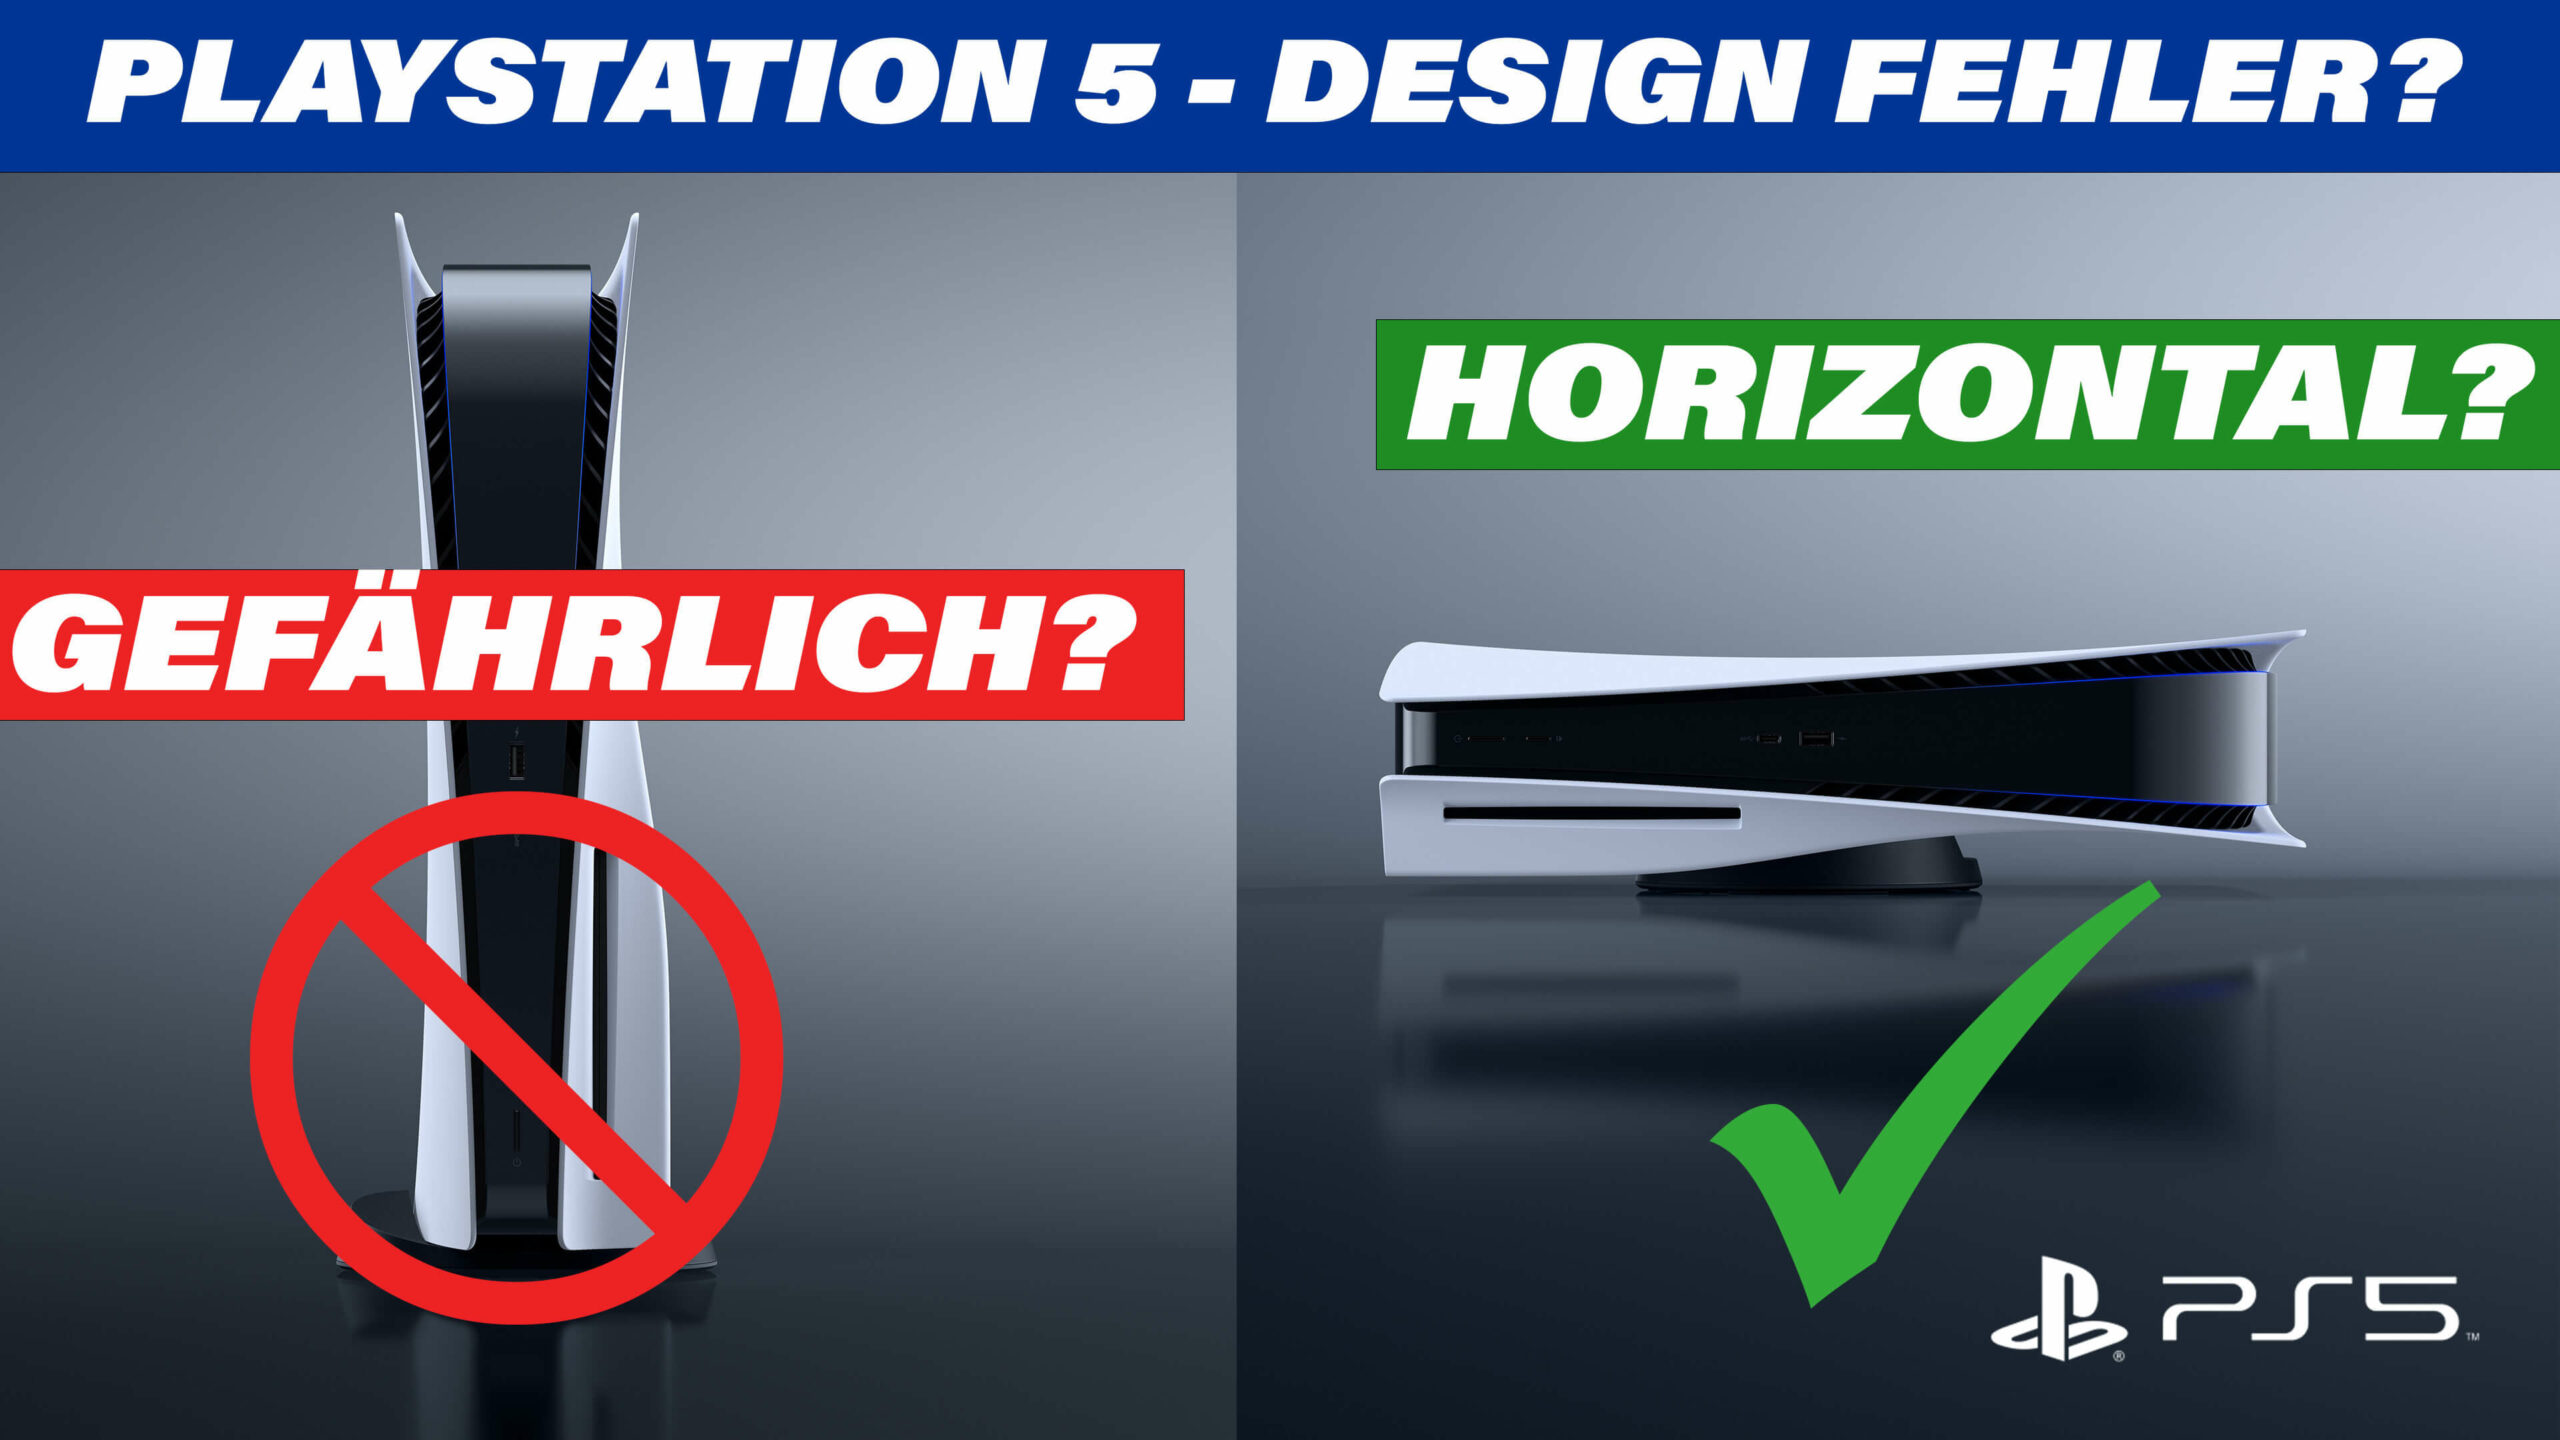 Sony PlayStation 5 Design Fehler? | PS5 Liquid Metal Problem? PS5 Vertical or Horizontal? Aufklärung